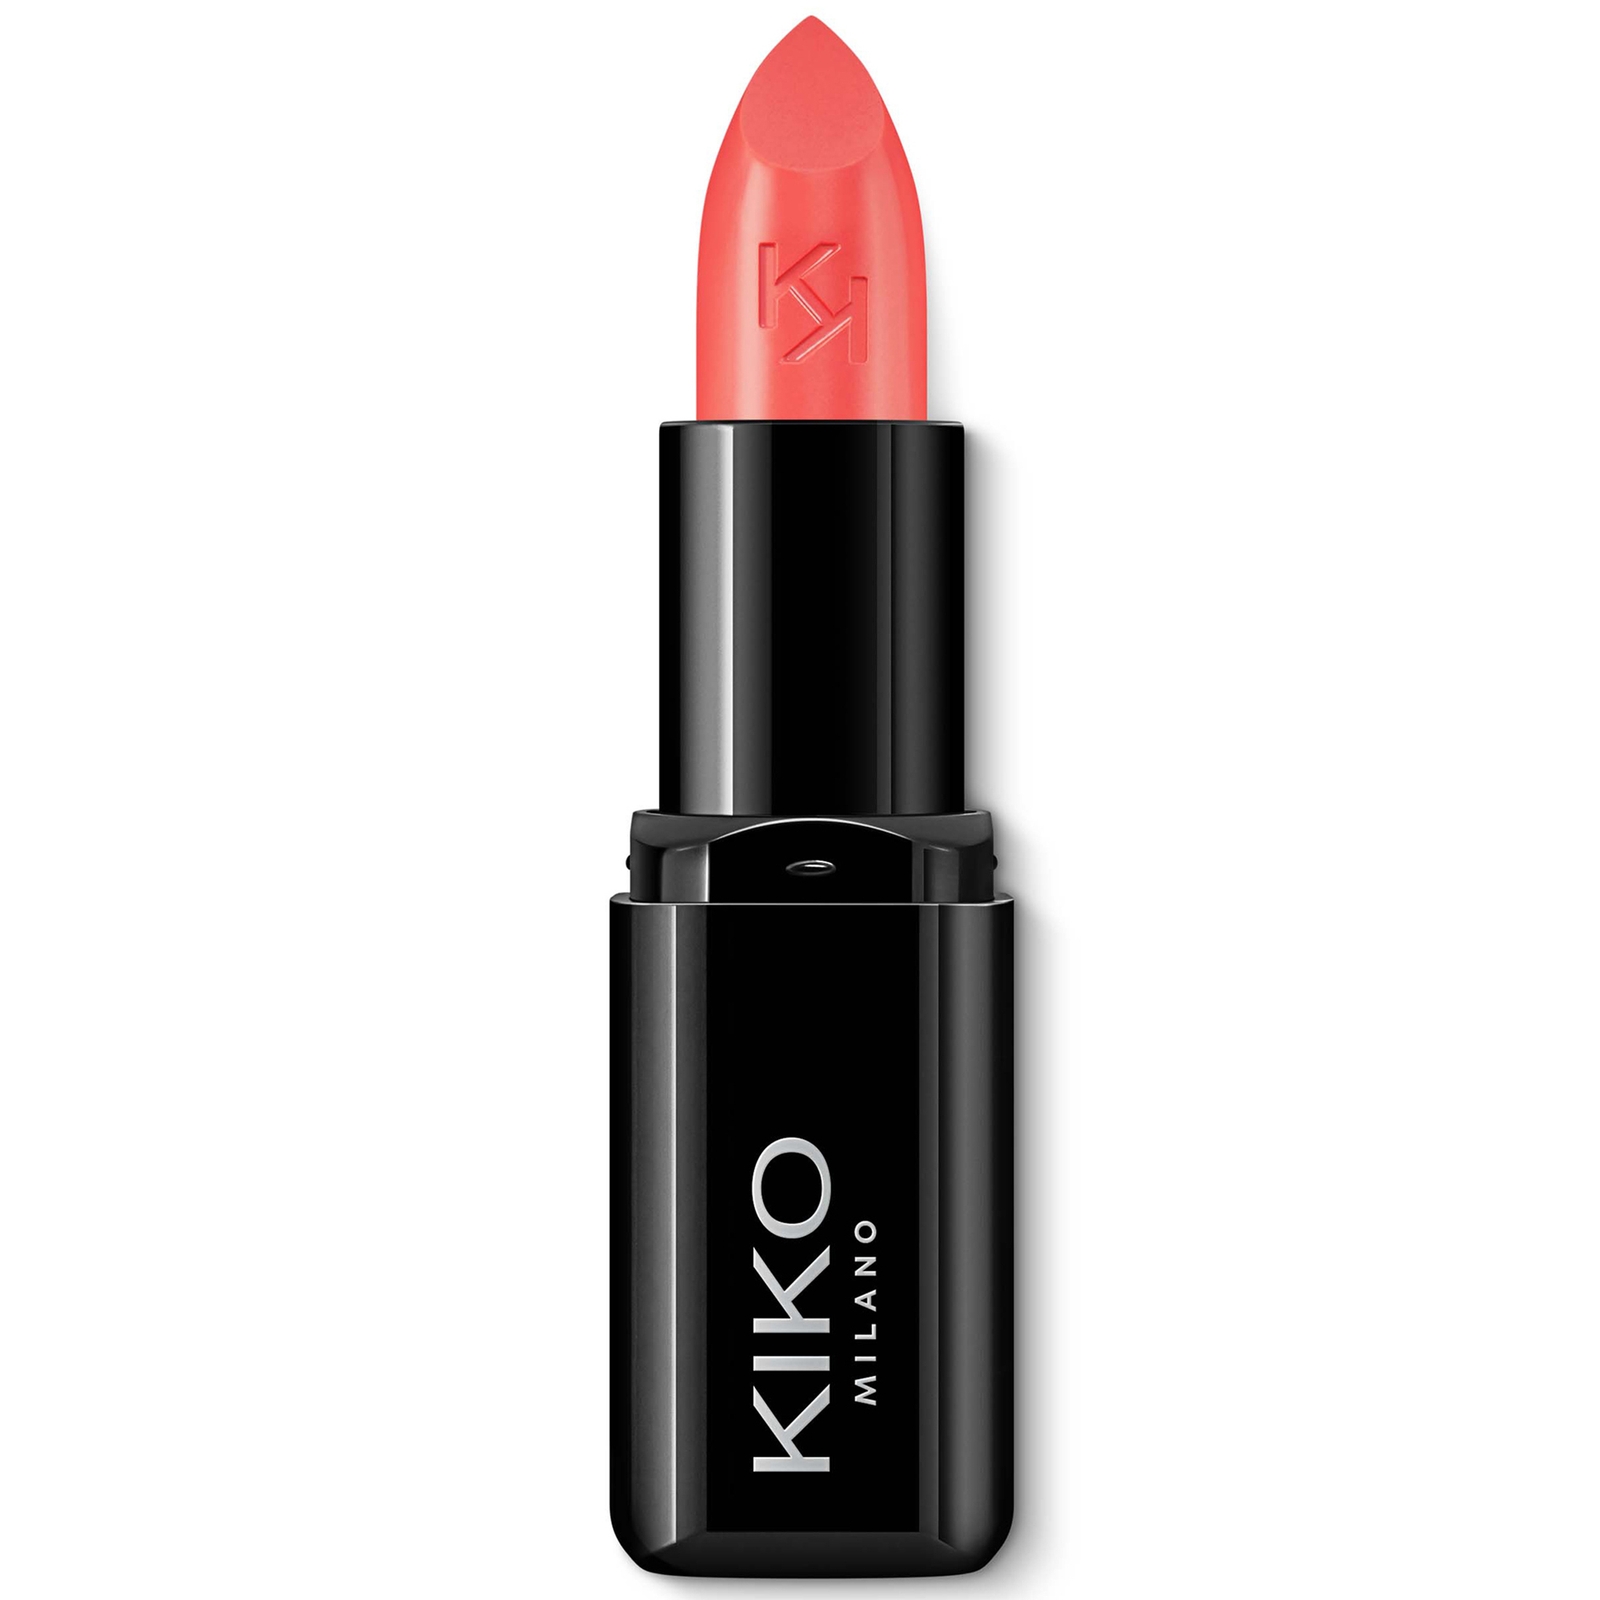 KIKO Milano Smart Fusion Lipstick 3g (Various Shades) - 410 Watermelon